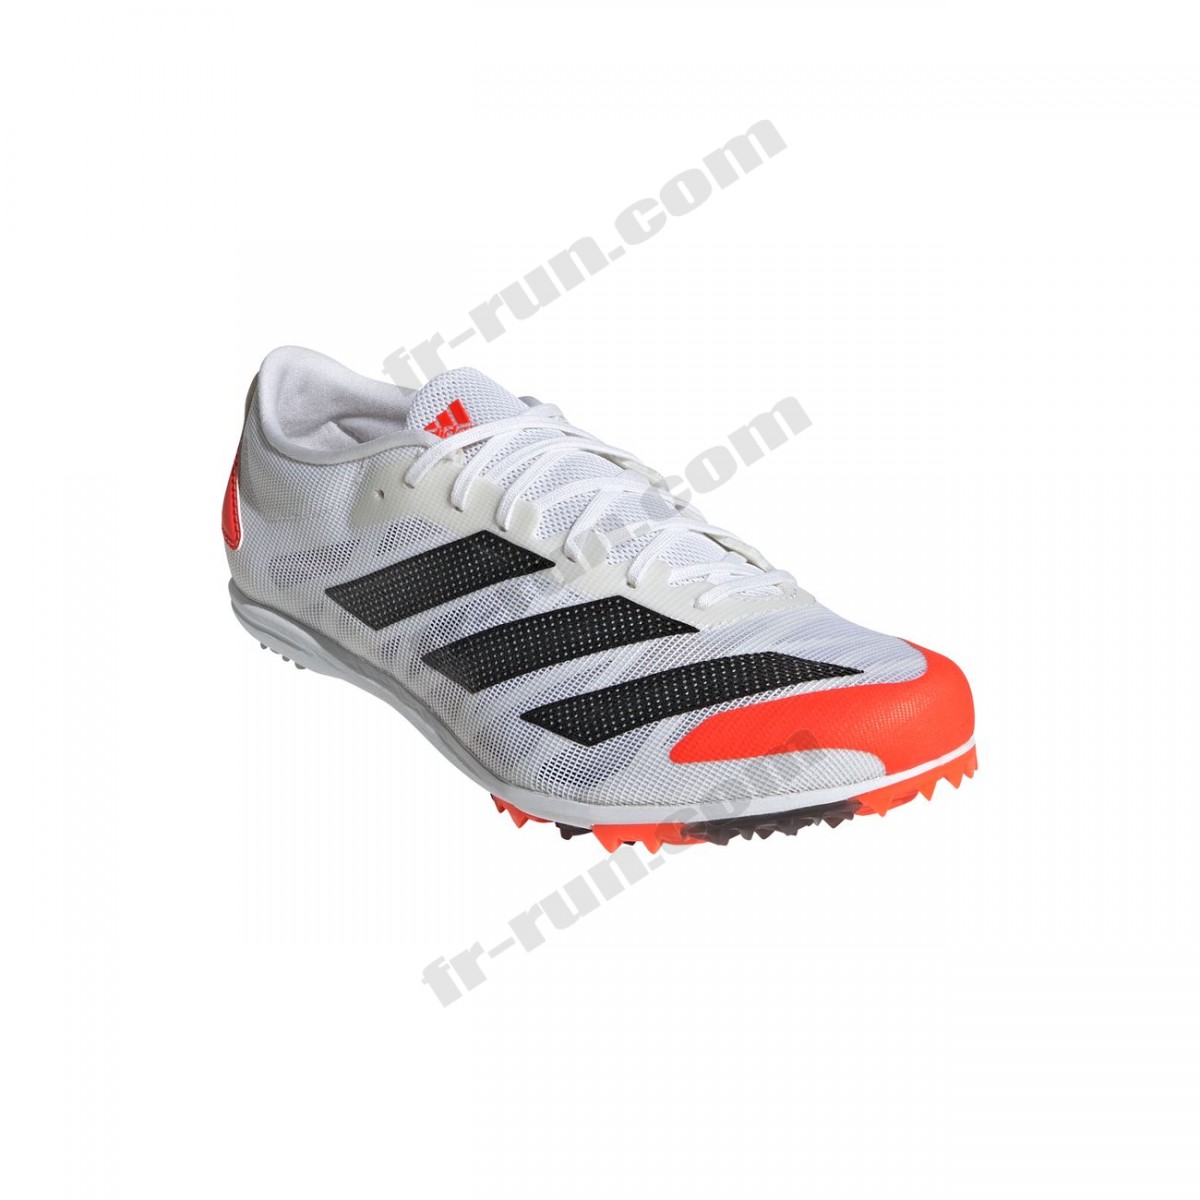 Adidas/Athlétisme adulte ADIDAS Chaussures adidas Adizero XCS √ Nouveau style √ Soldes - -10